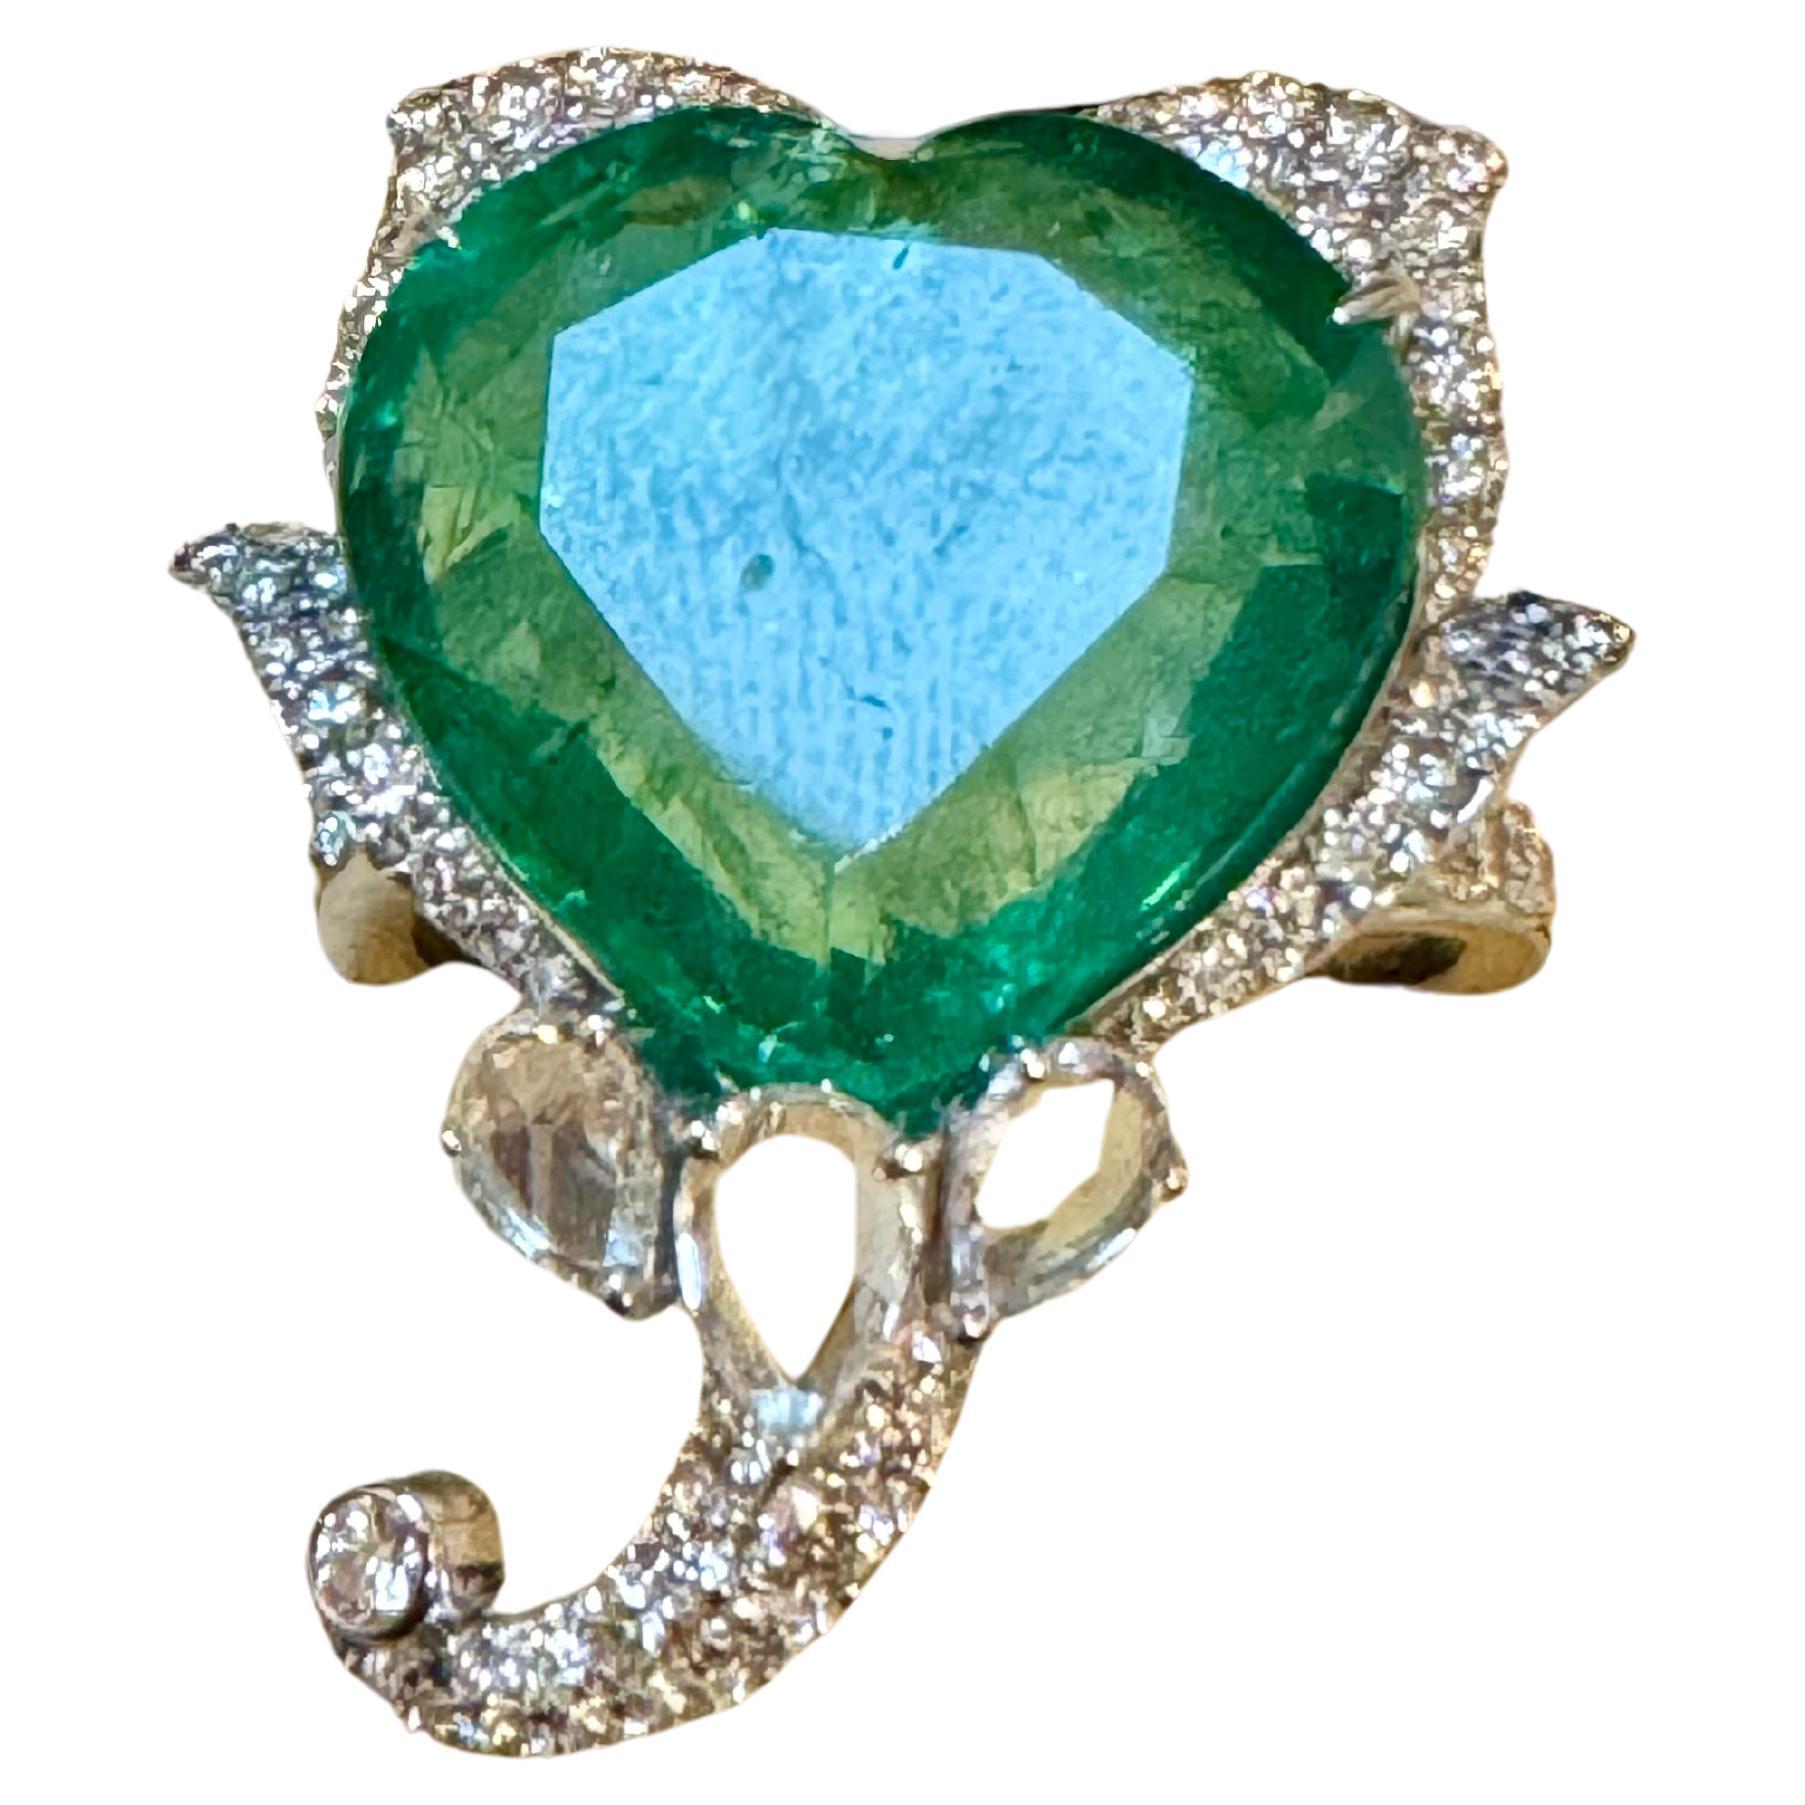 13 Ct  Zambian Heart Cut Emerald & 1.5 Ct Diamond Ring, 18 Kt Gold Size 8.5  For Sale